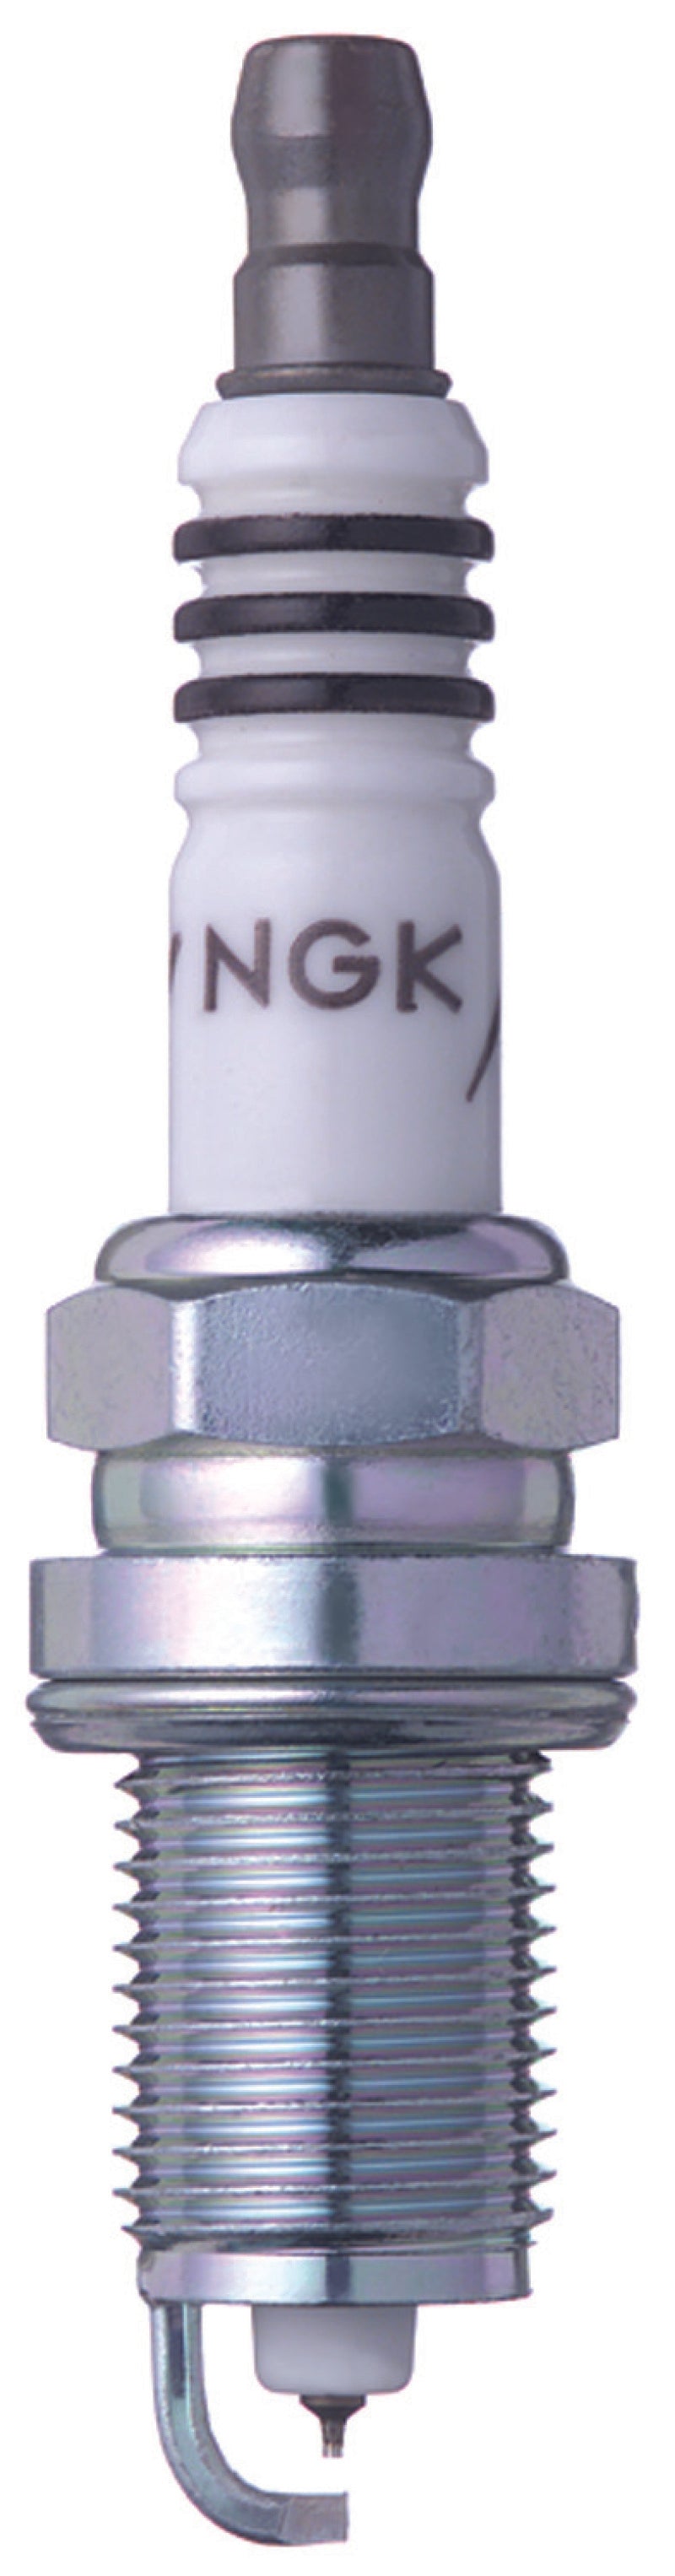 NGK Iridium Spark Plug Box of 4 (ZFR6FIX-11)